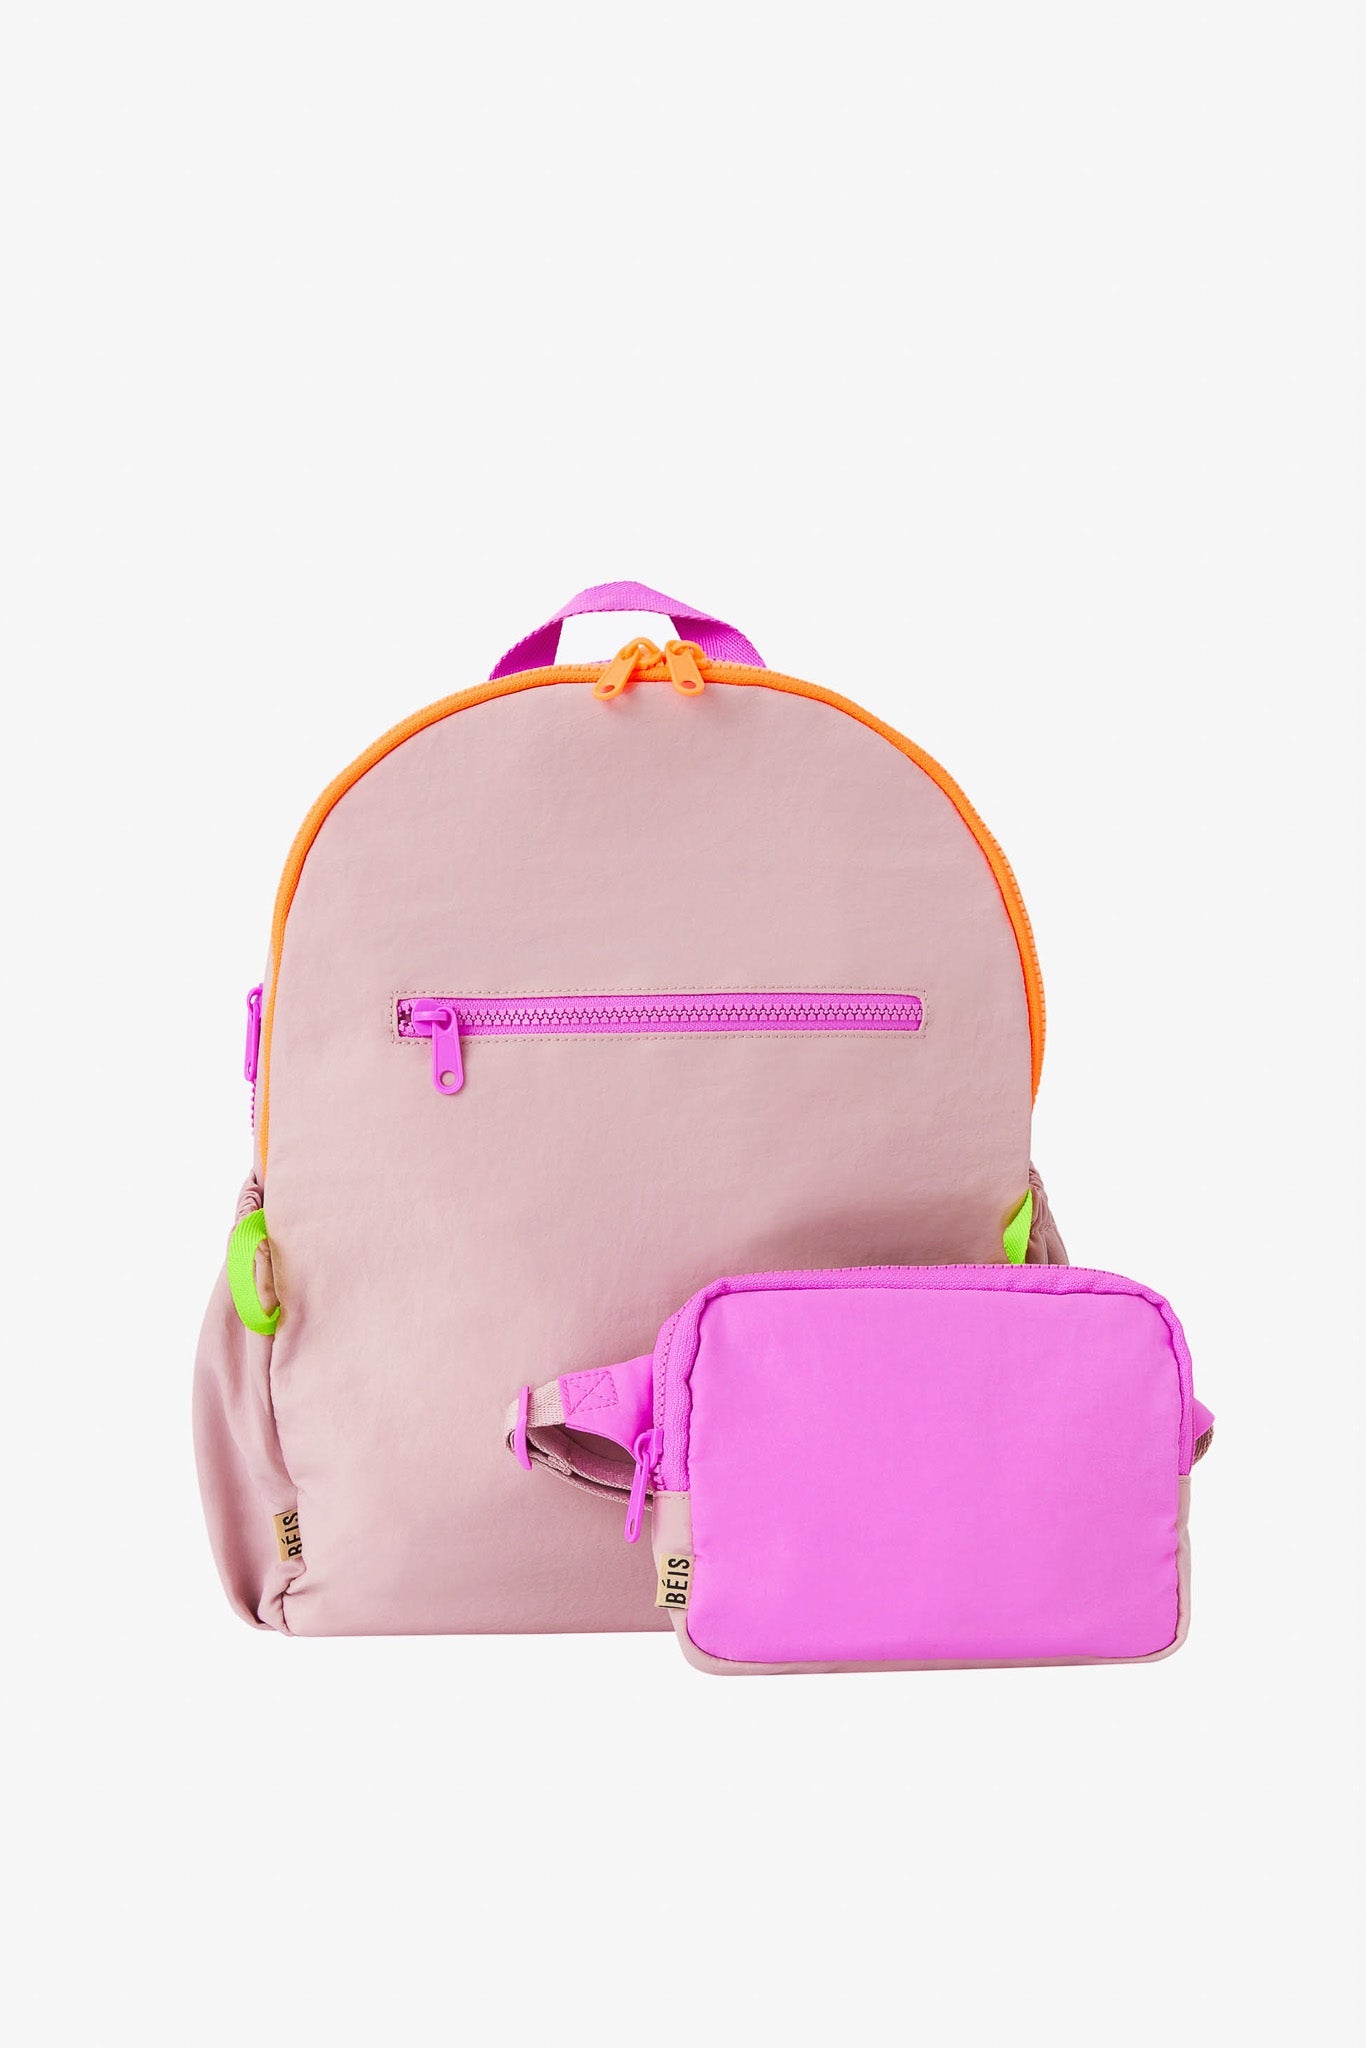 The Kids Backpack in Atlas Pink